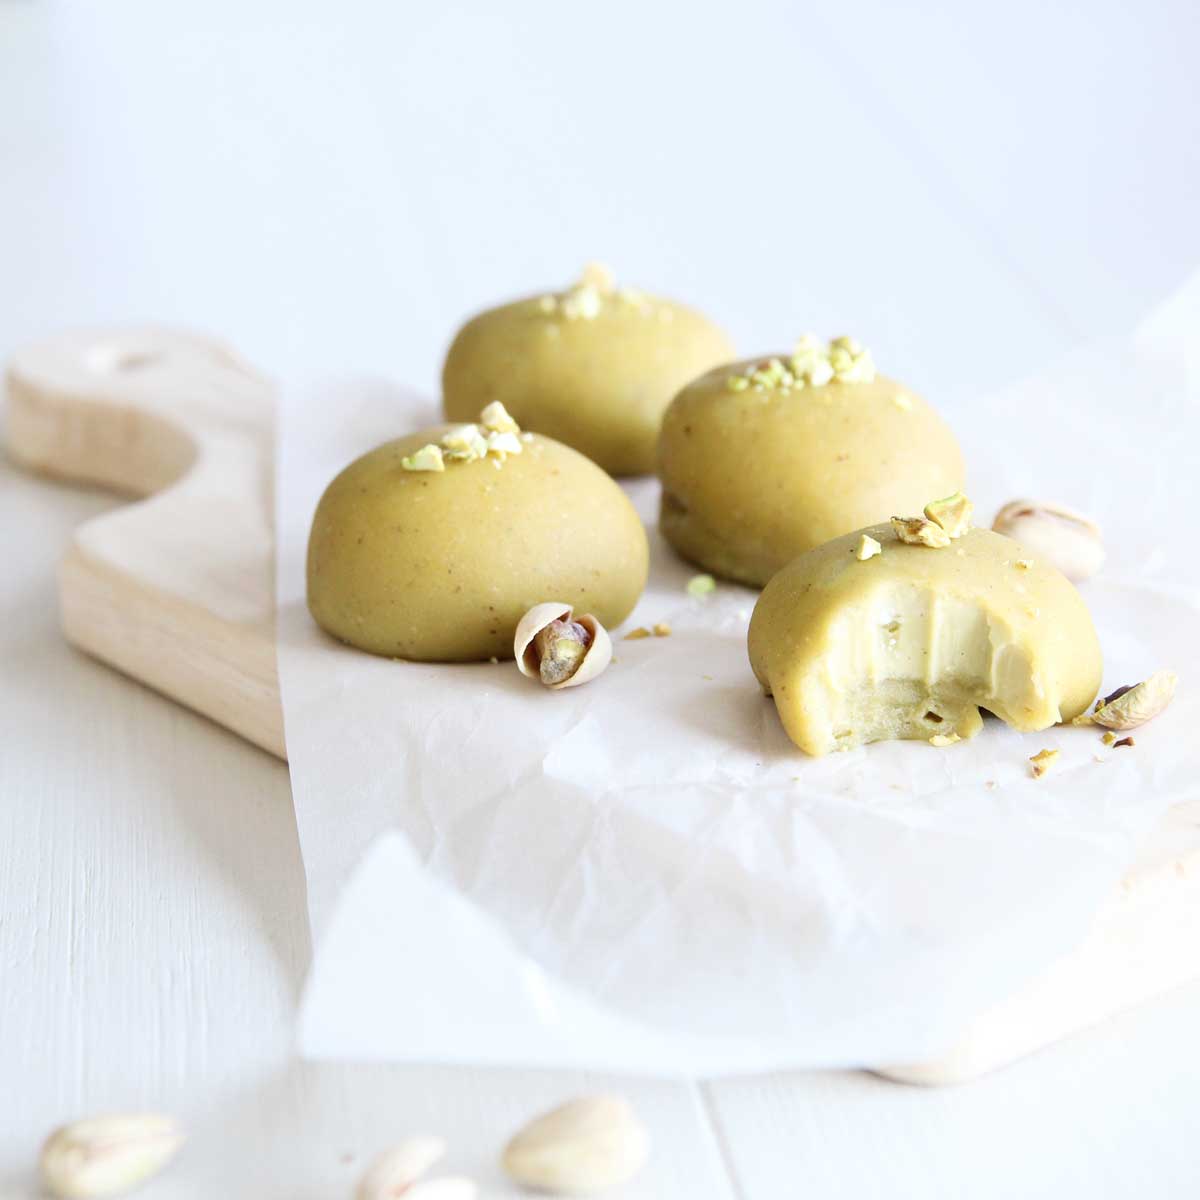 The Best Ever Pistachio Butter Mochi (Made with Mochiko Flour) - Pistachio Mochi